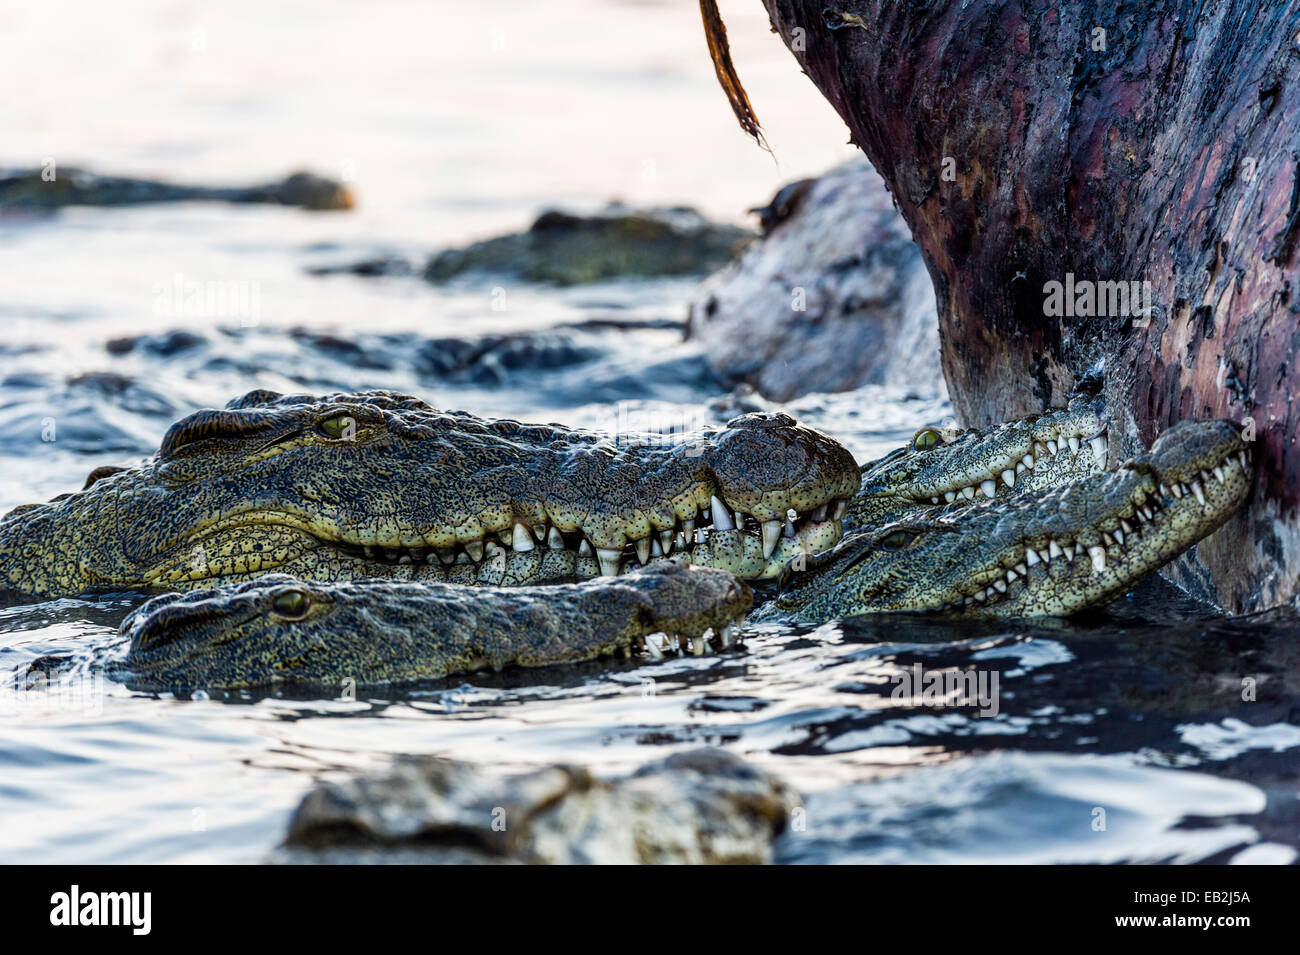 Nile Crocodiles in a feeding frenzy surround a bloated Nile Hippo carcass. Stock Photo